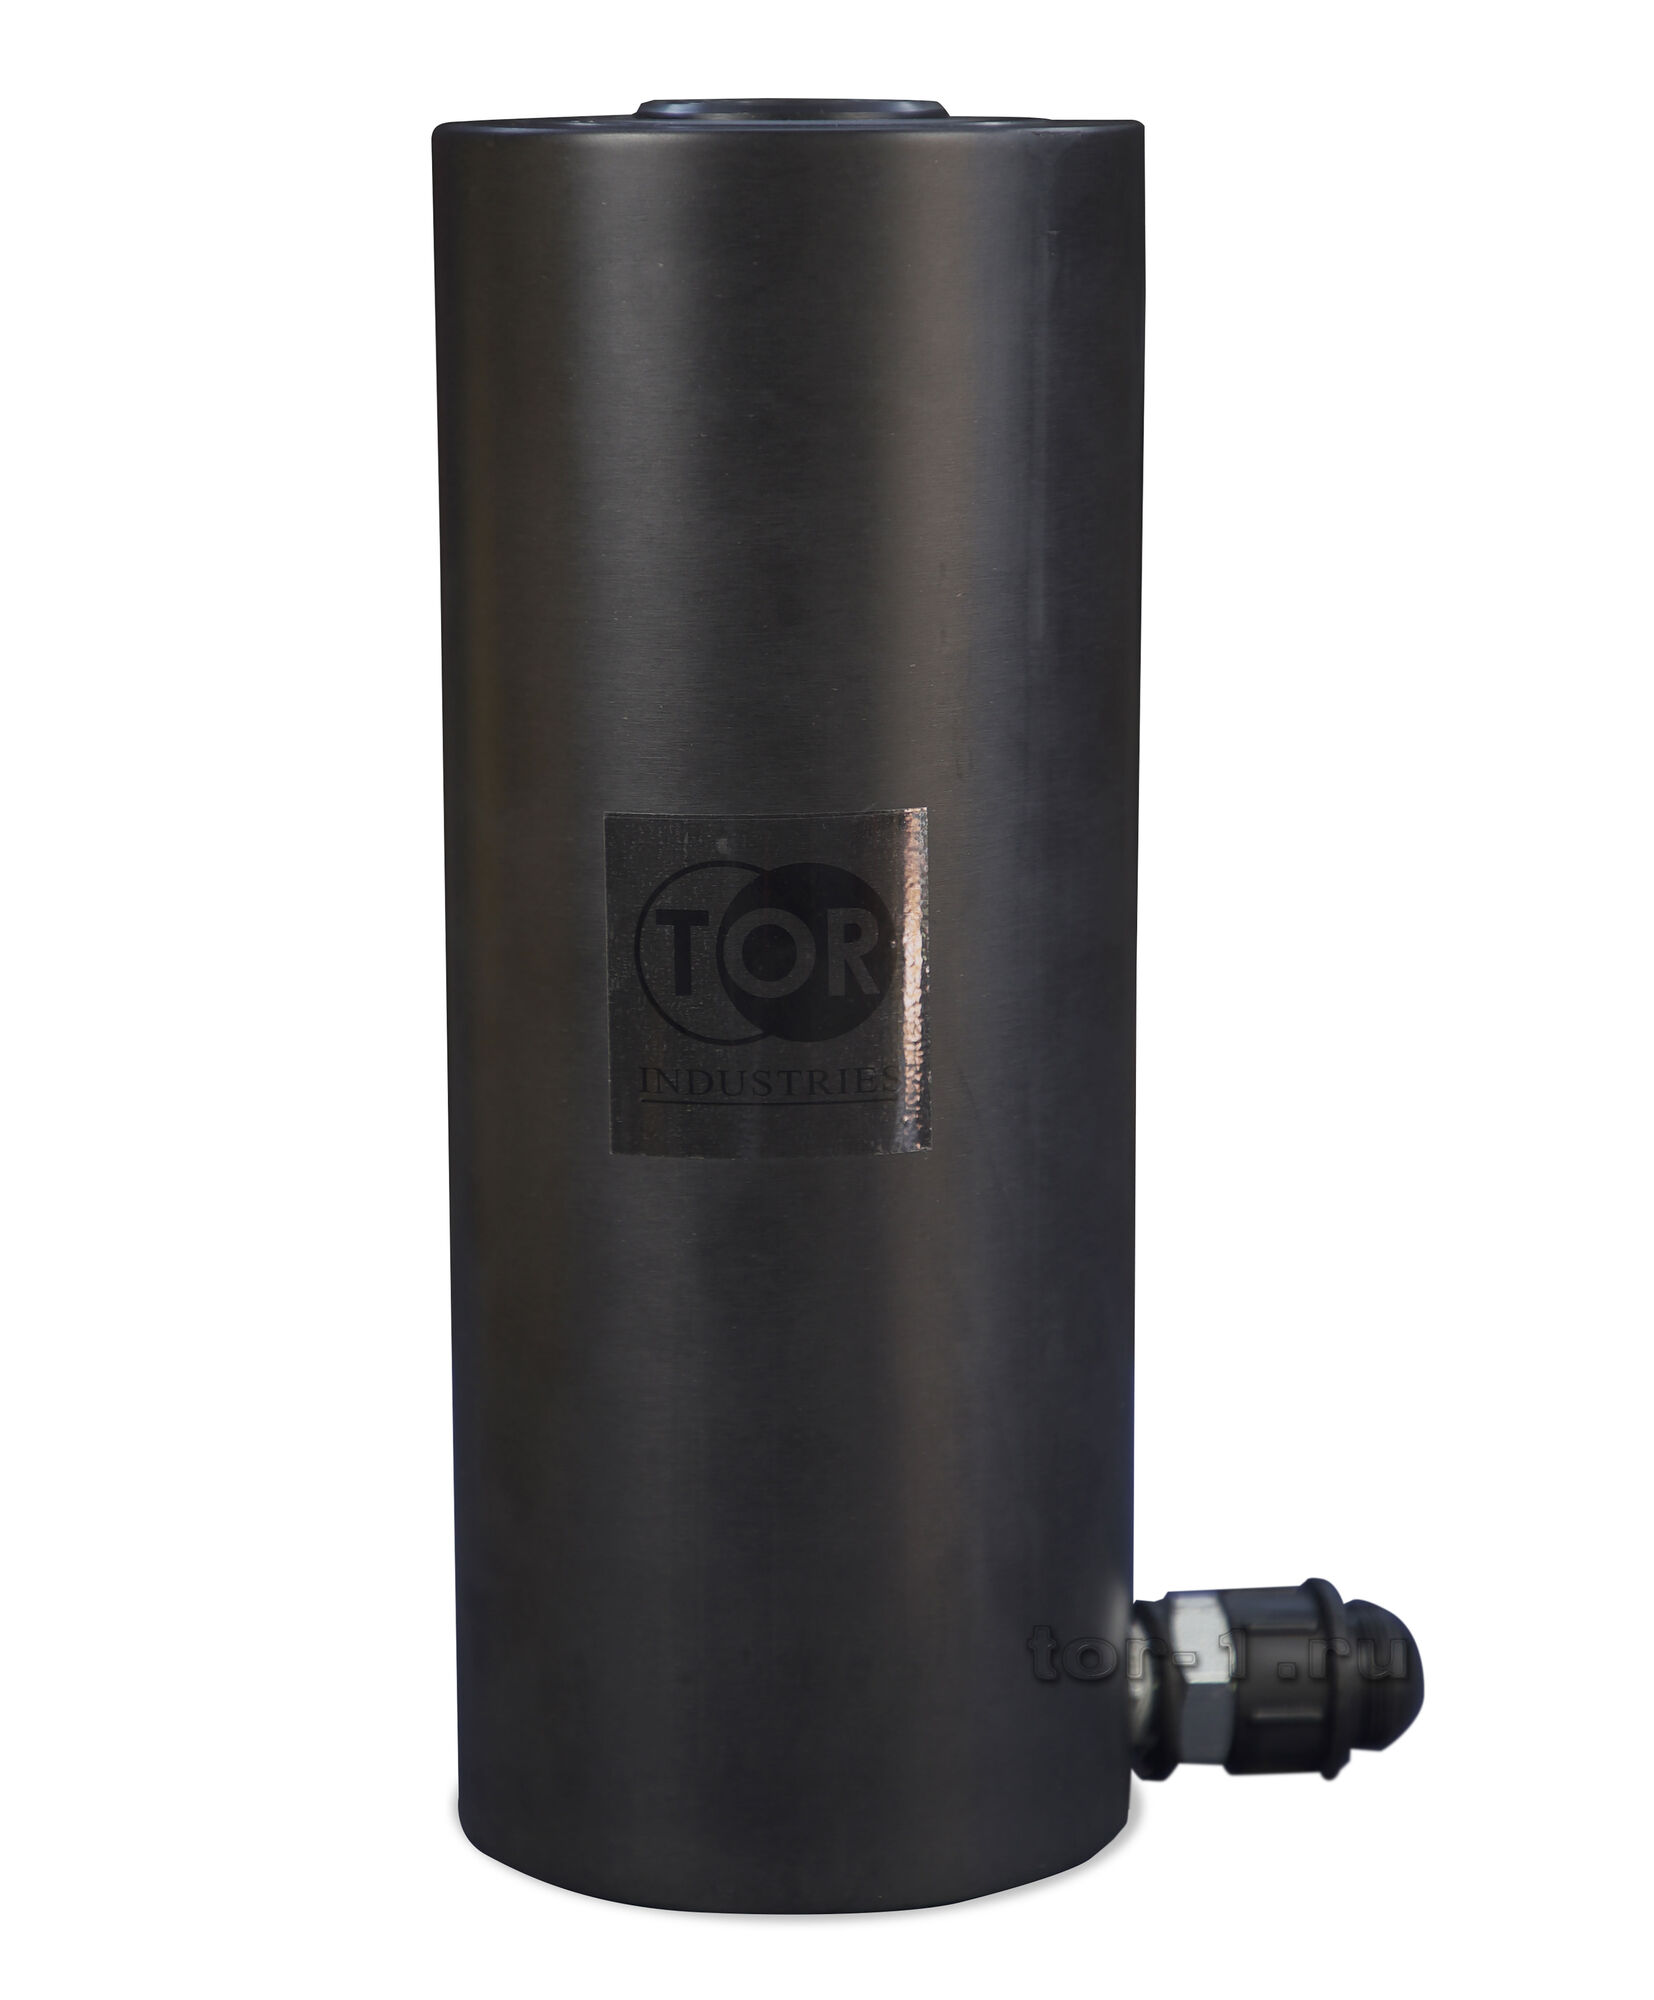 Домкрат гидравлический алюминиевый TOR HHYG-5050L (ДГА50П50) 50 т